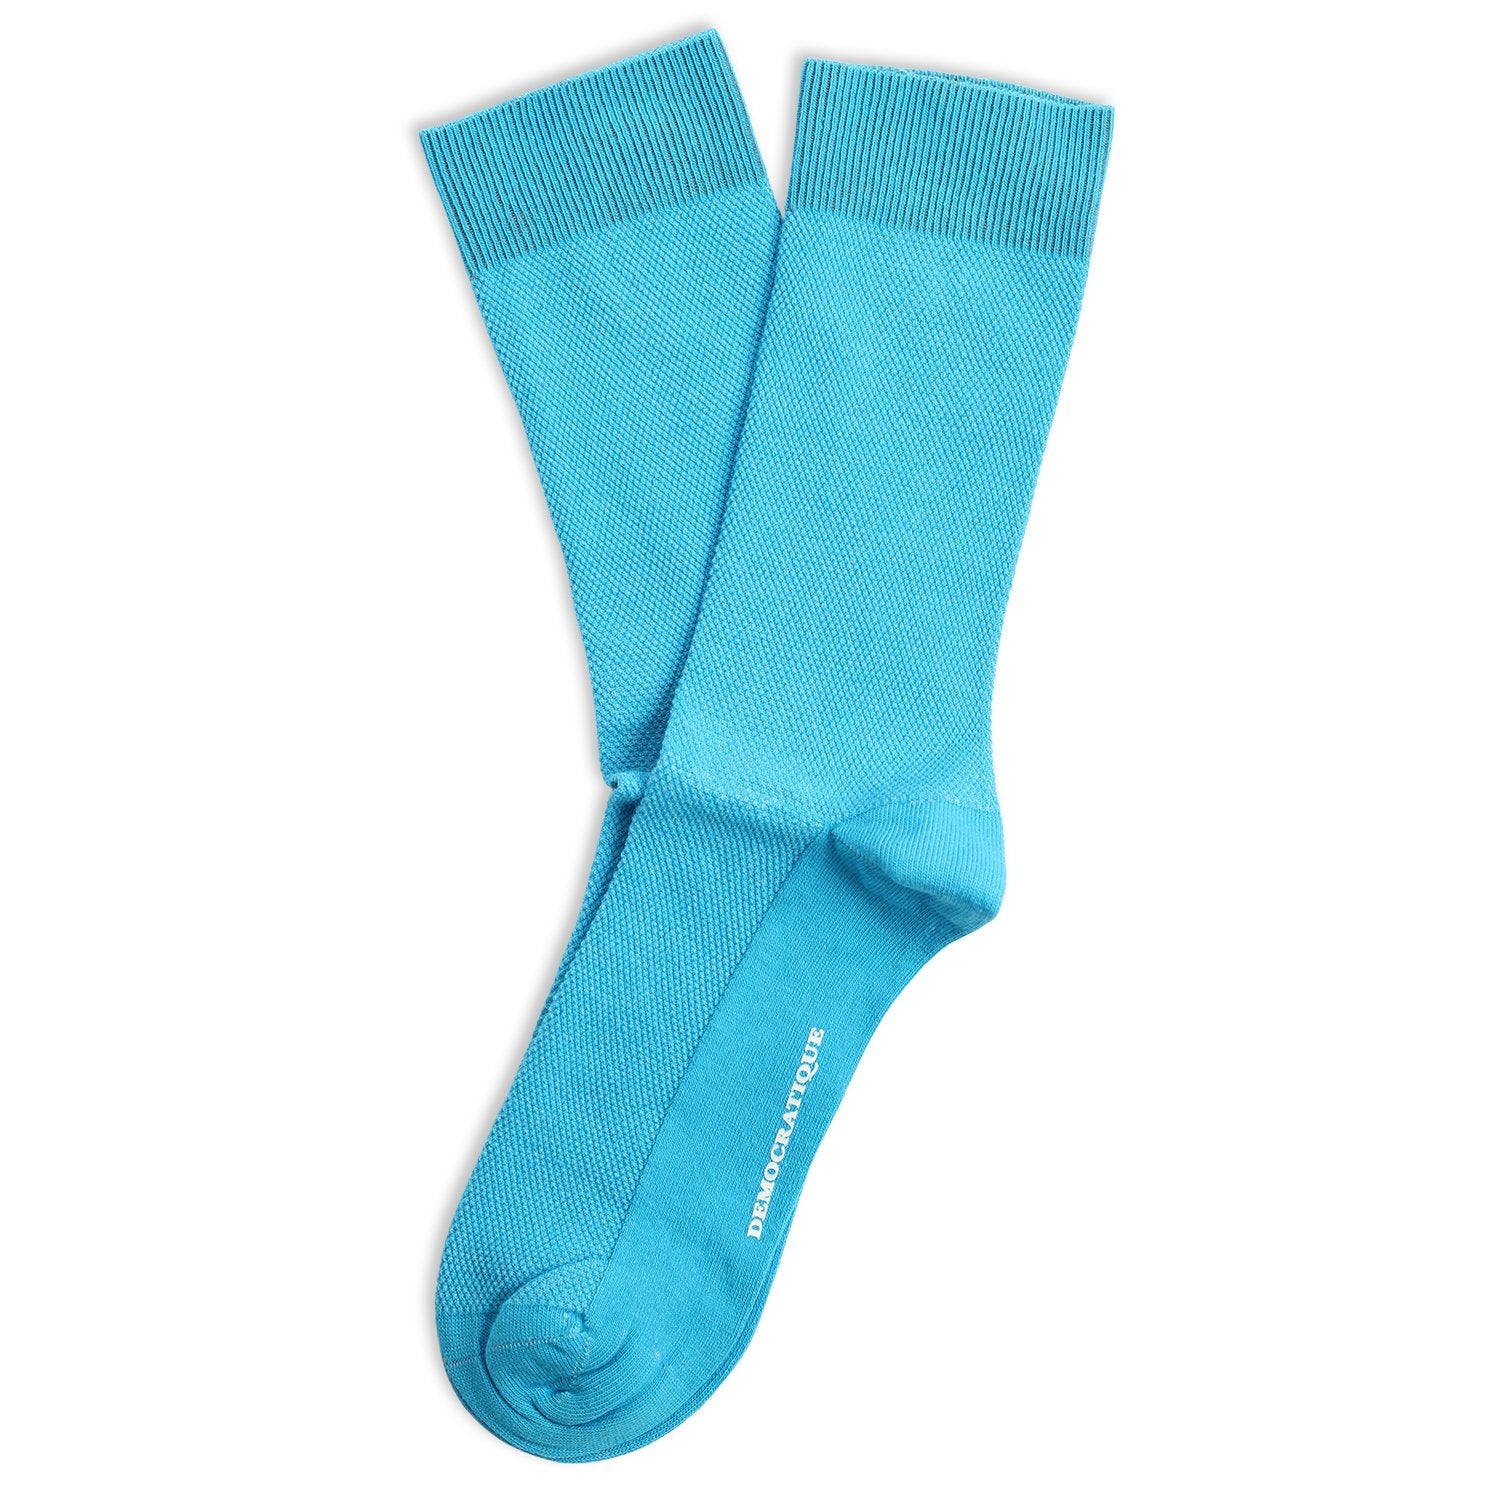 Swimmingpool pique socks | Champagne Swimmingpool | Democratique socks